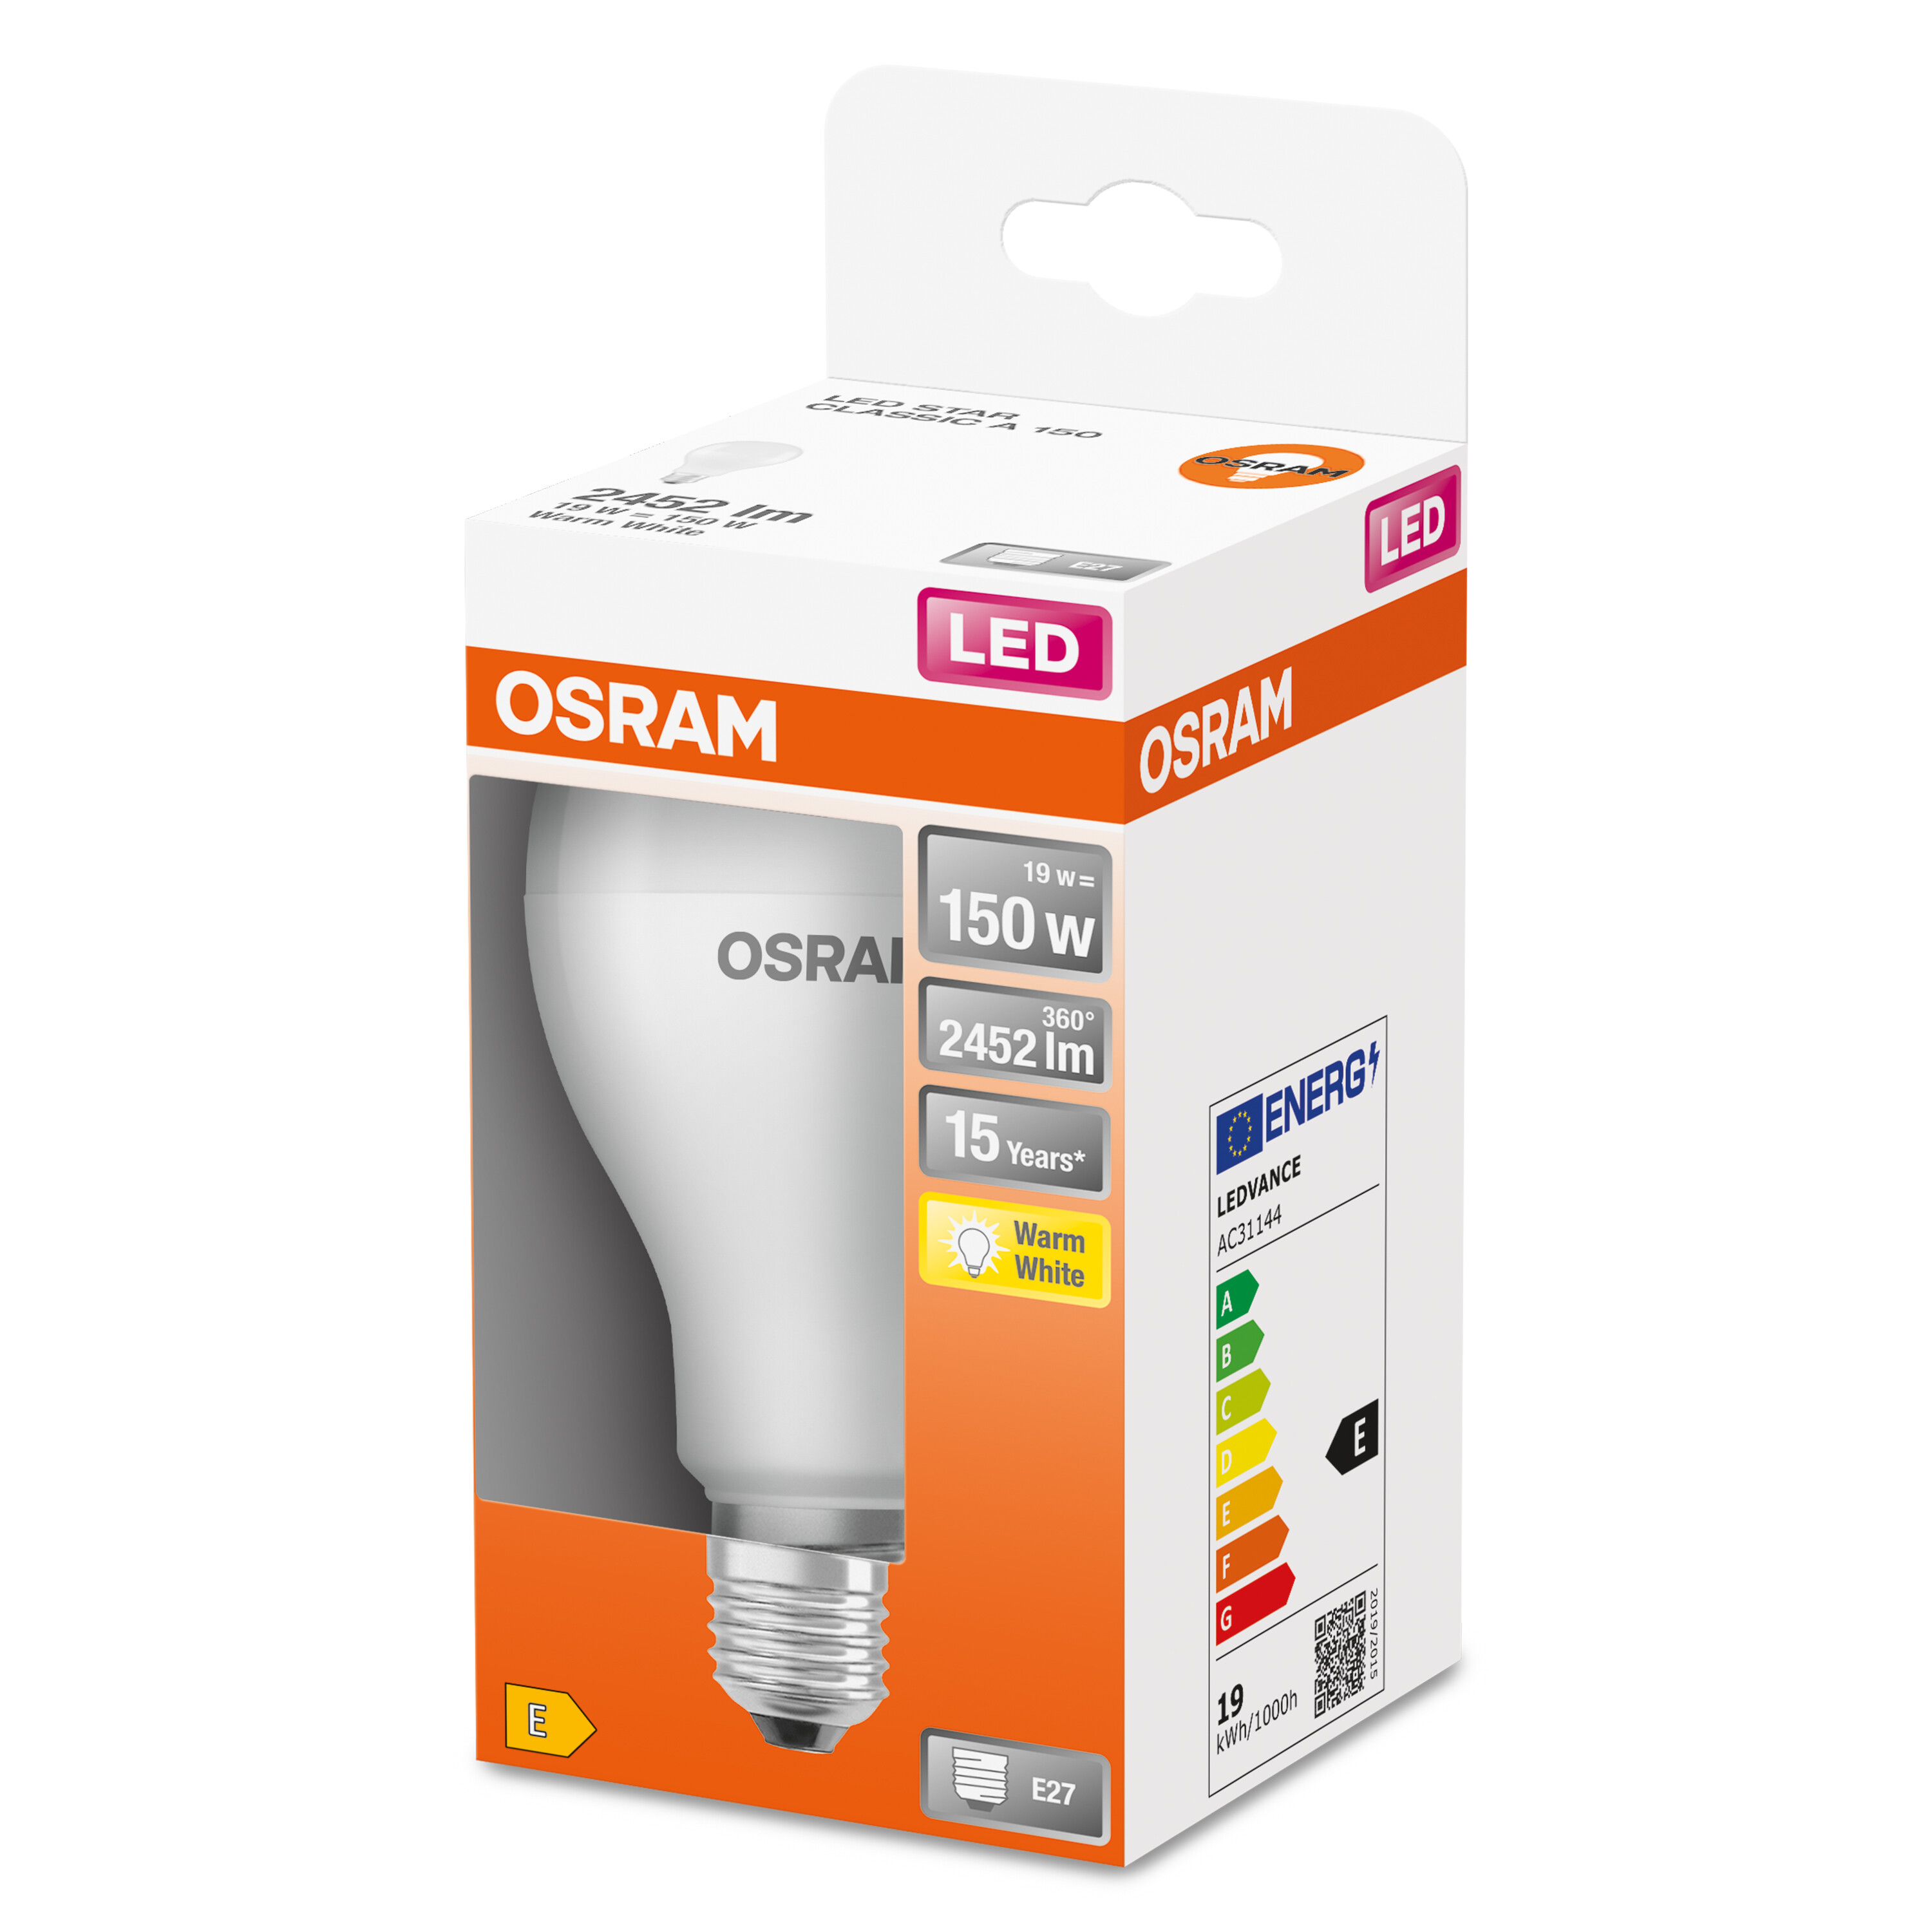 A CLASSIC 2452 STAR OSRAM  LED Kaltweiß Lampe Lumen LED